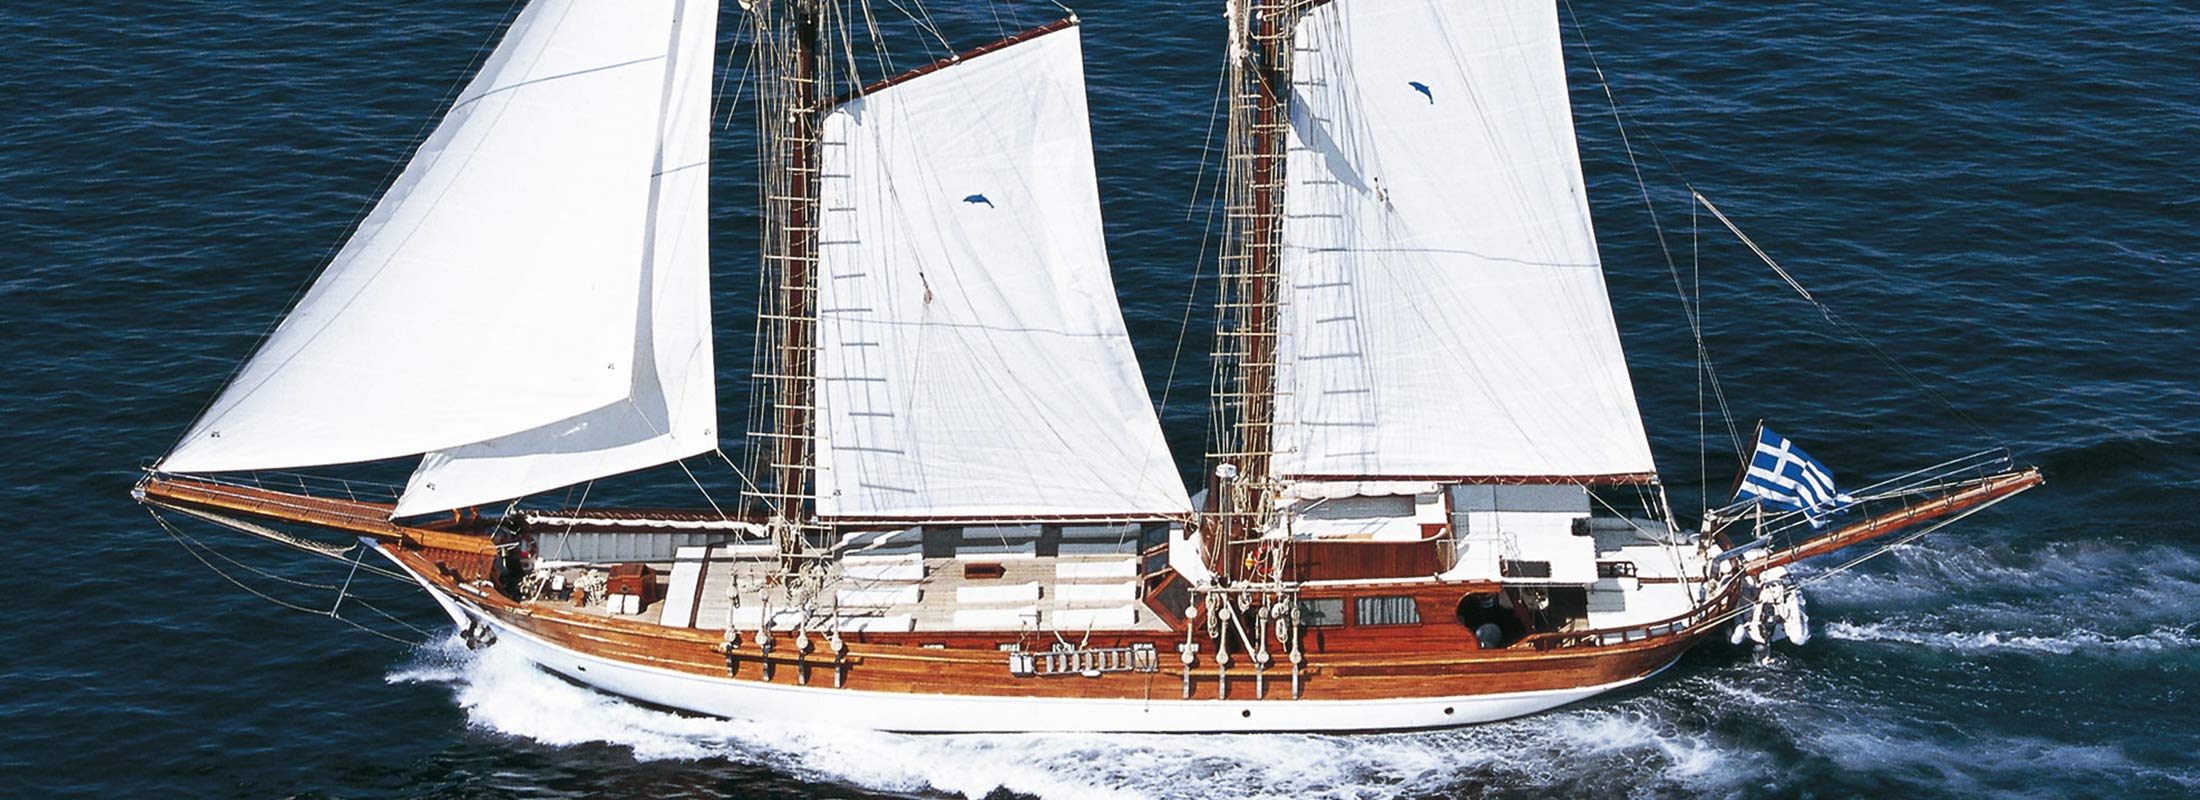 Matina Sailing Yacht for Charter Mediterranean slider 1